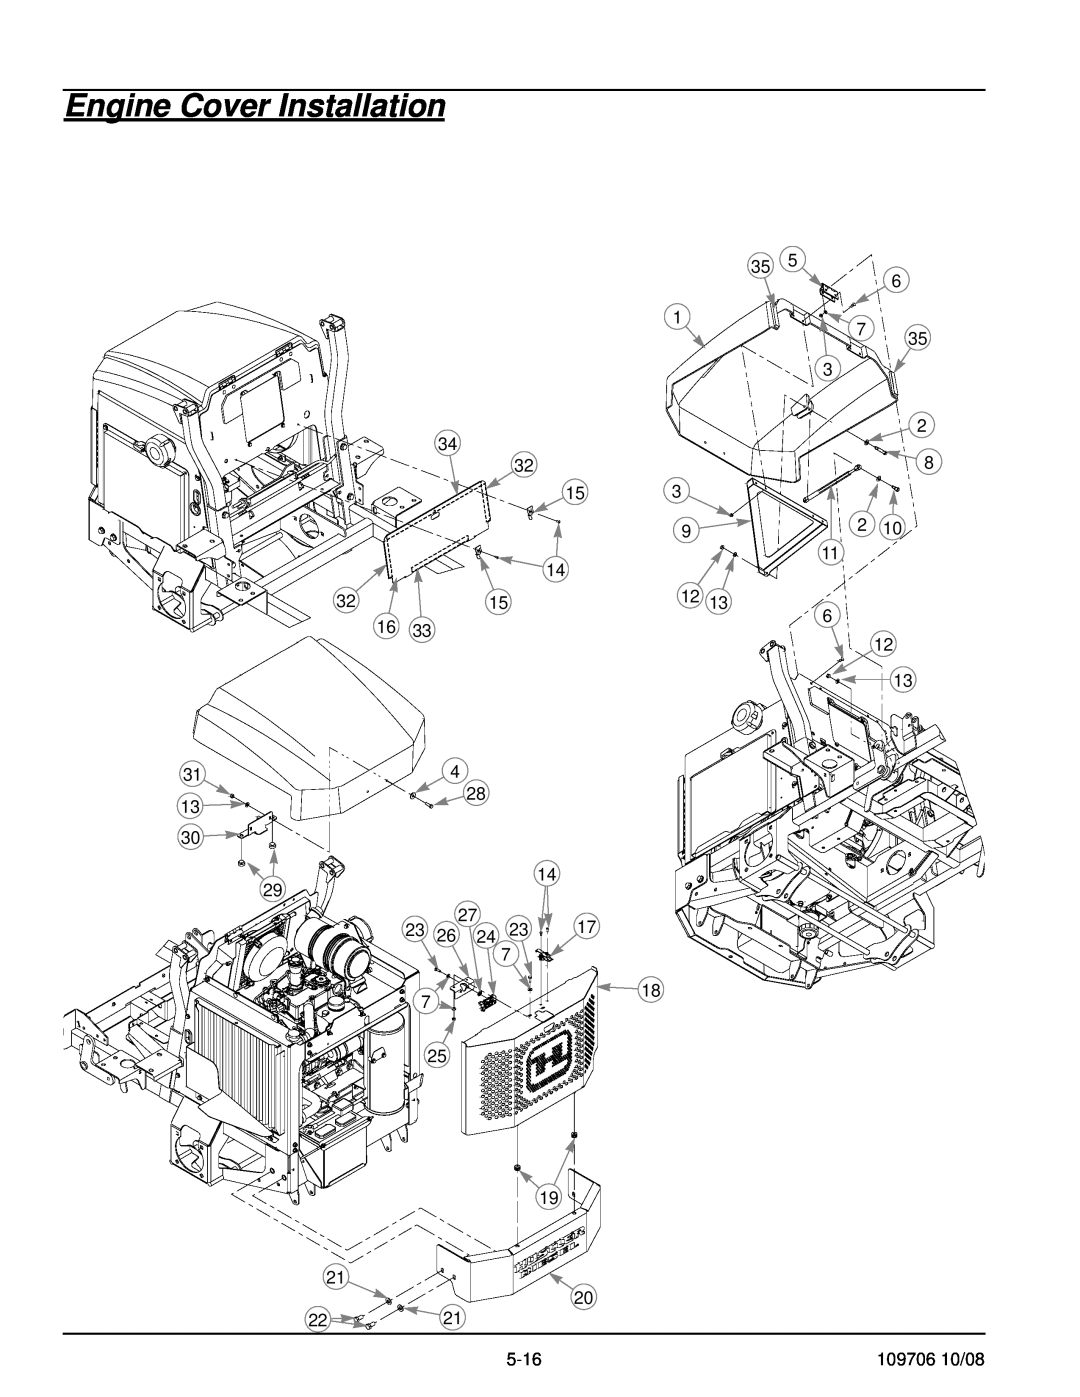 Hustler Turf Diesel Z manual Engine Cover Installation, 3215, 5-16, 109706 10/08 